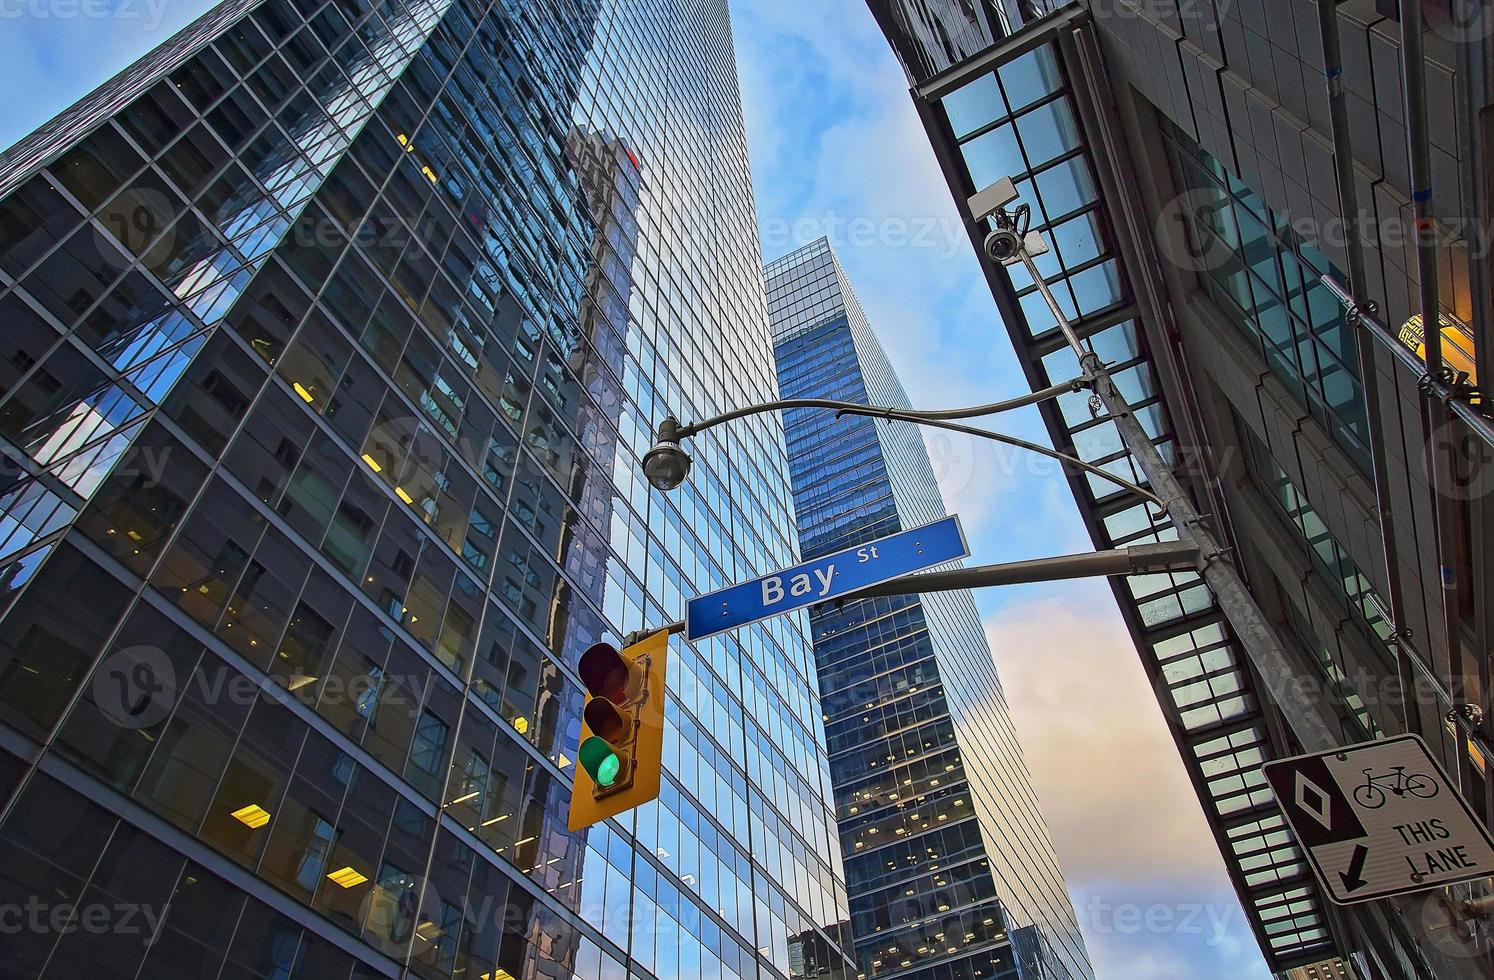 Scenic Toronto financial district skyline and modern architecture skyline photo